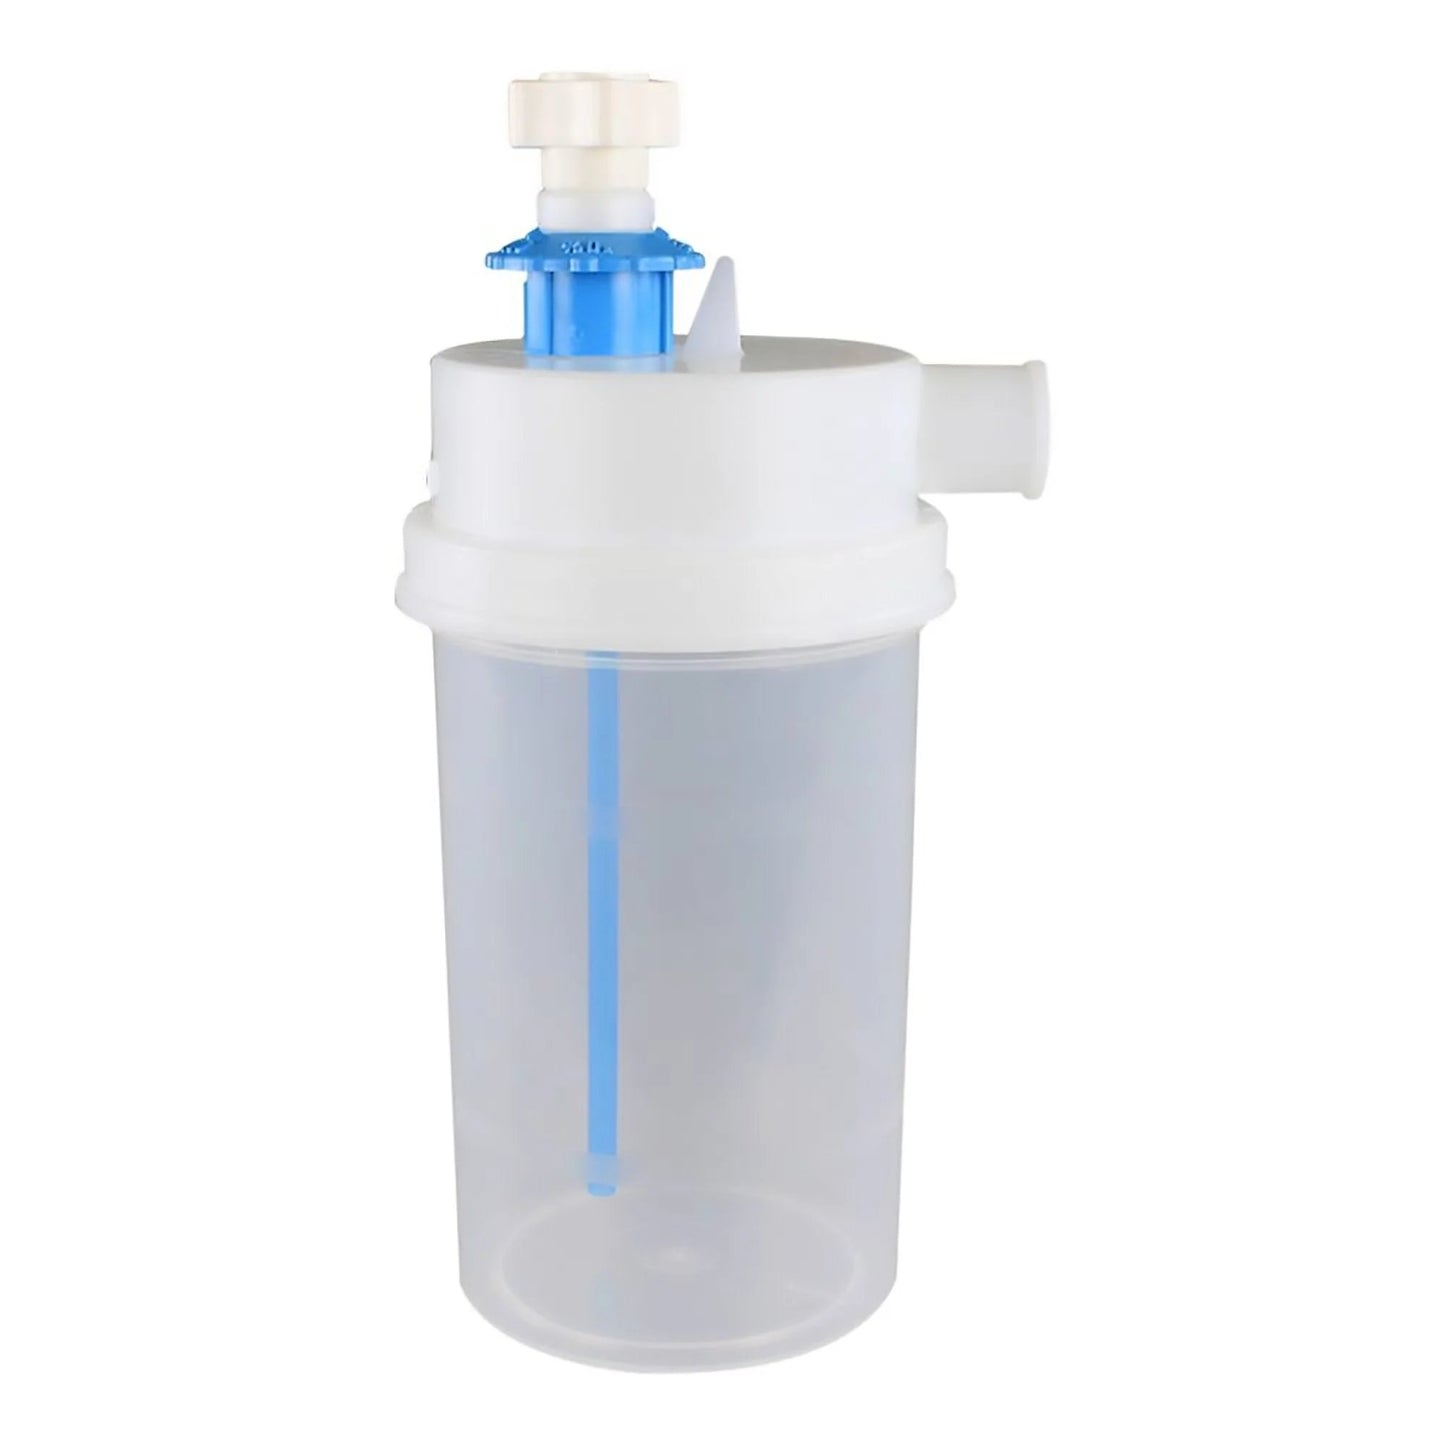 Vyaire Medical AirLife Handheld Nebulizer Kit Large Volume Medication Bottle Universal Mouthpiece Delivery